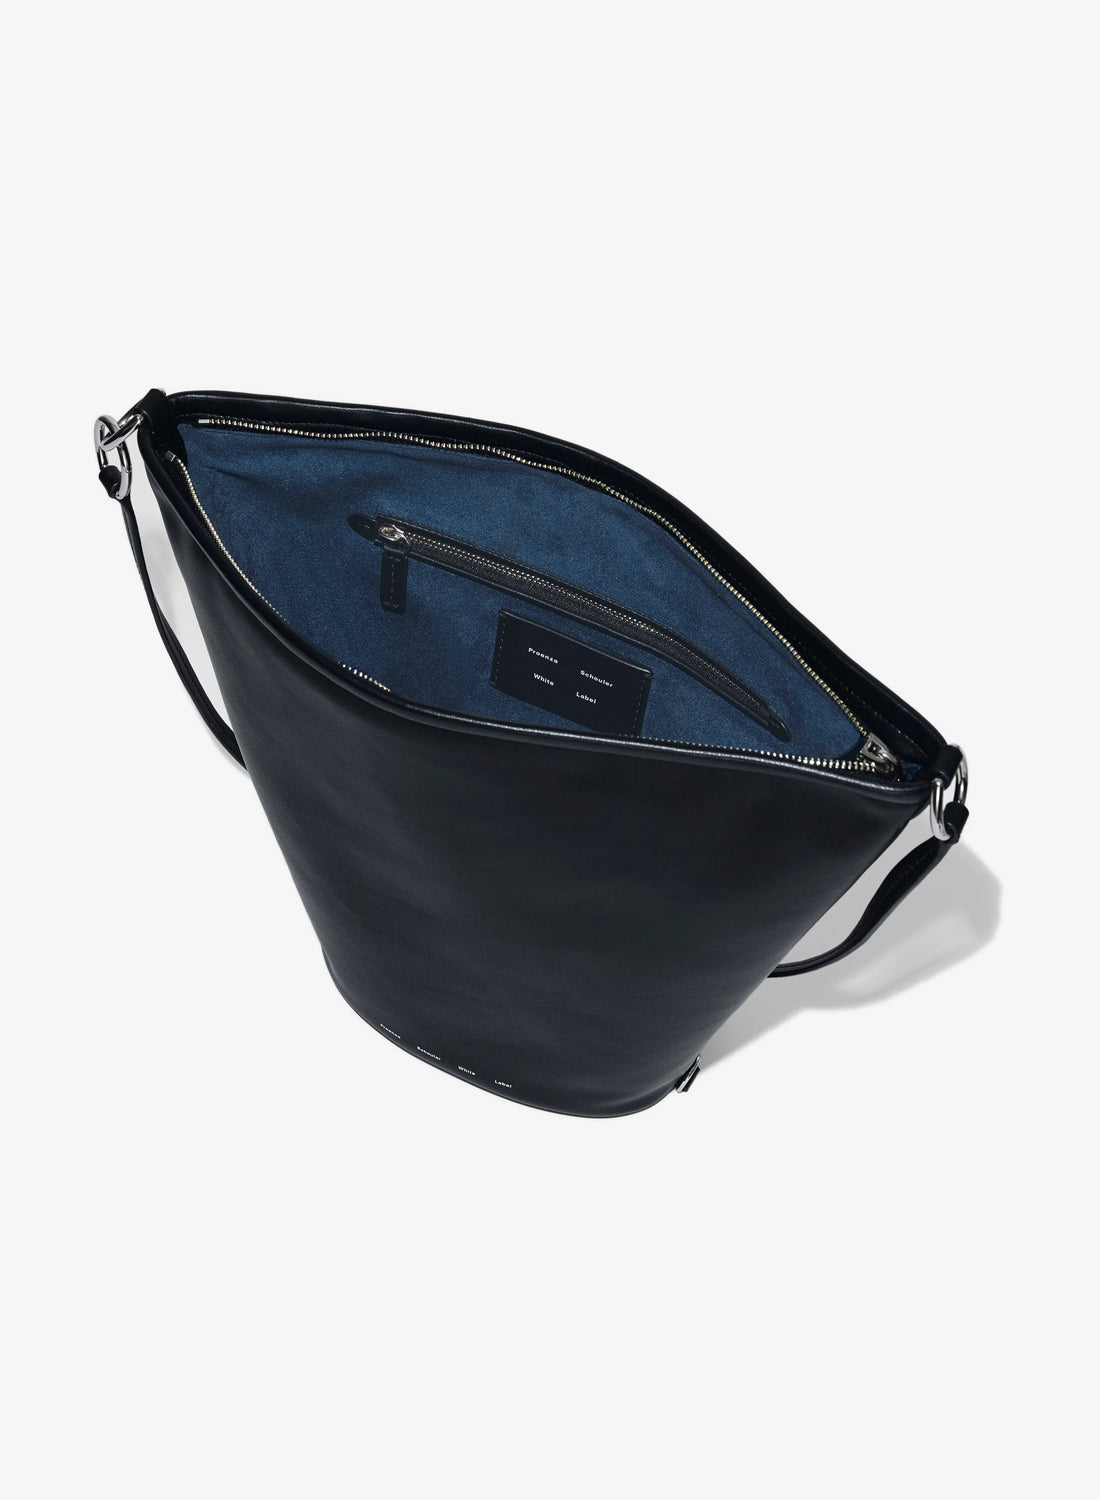 Proenza Schouler White Label Spring Bucket Bag In Leather Black